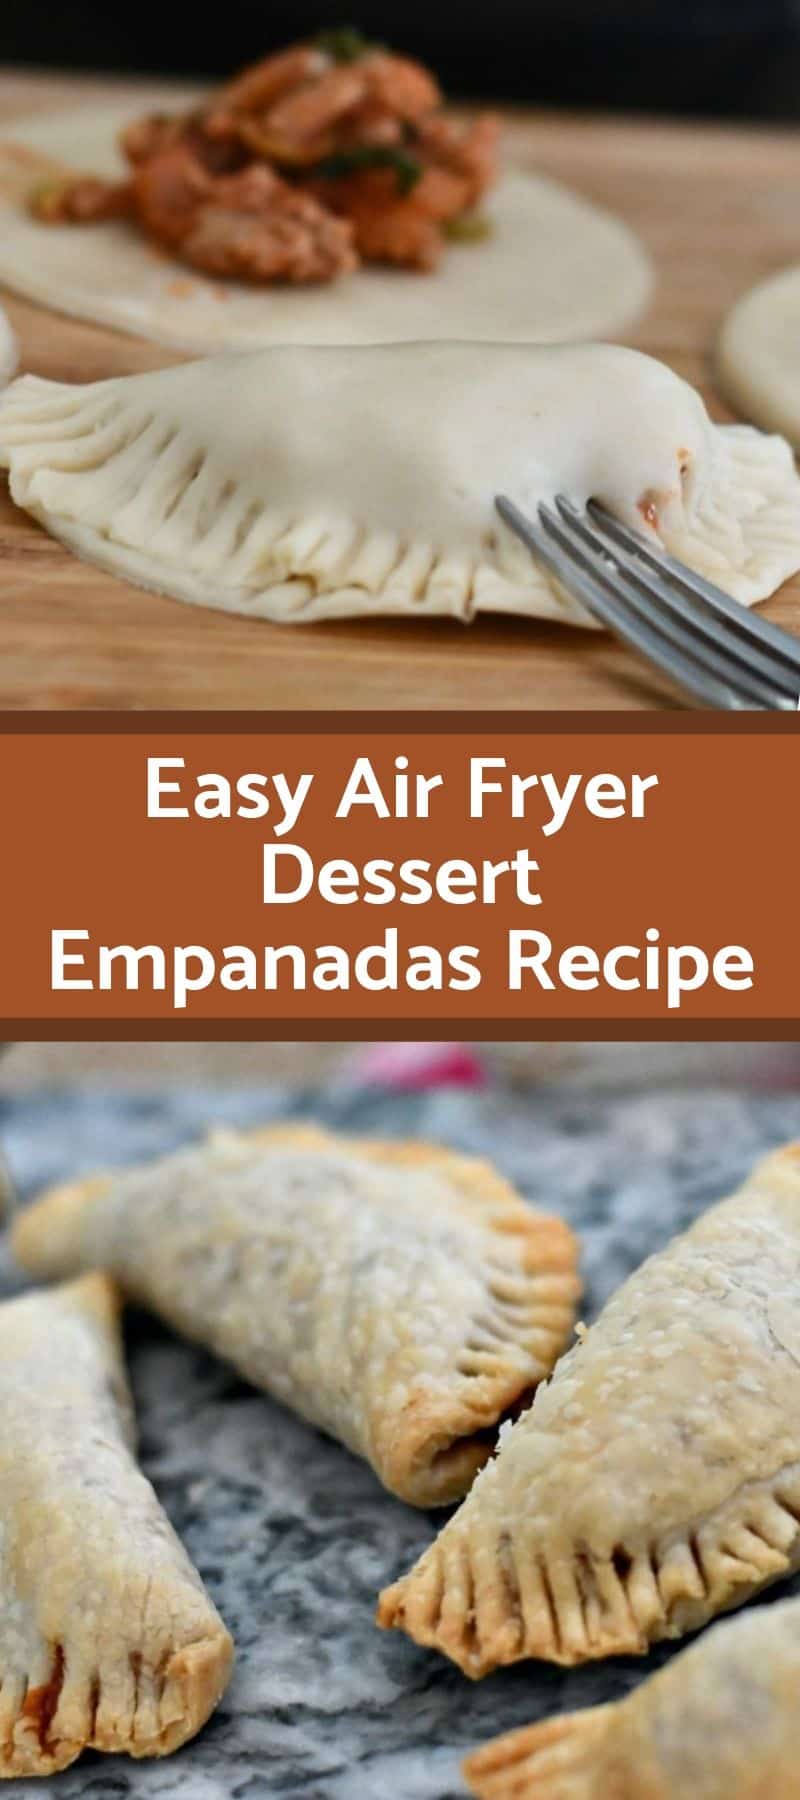 Easy Air Fryer Dessert Empanadas Recipe 3